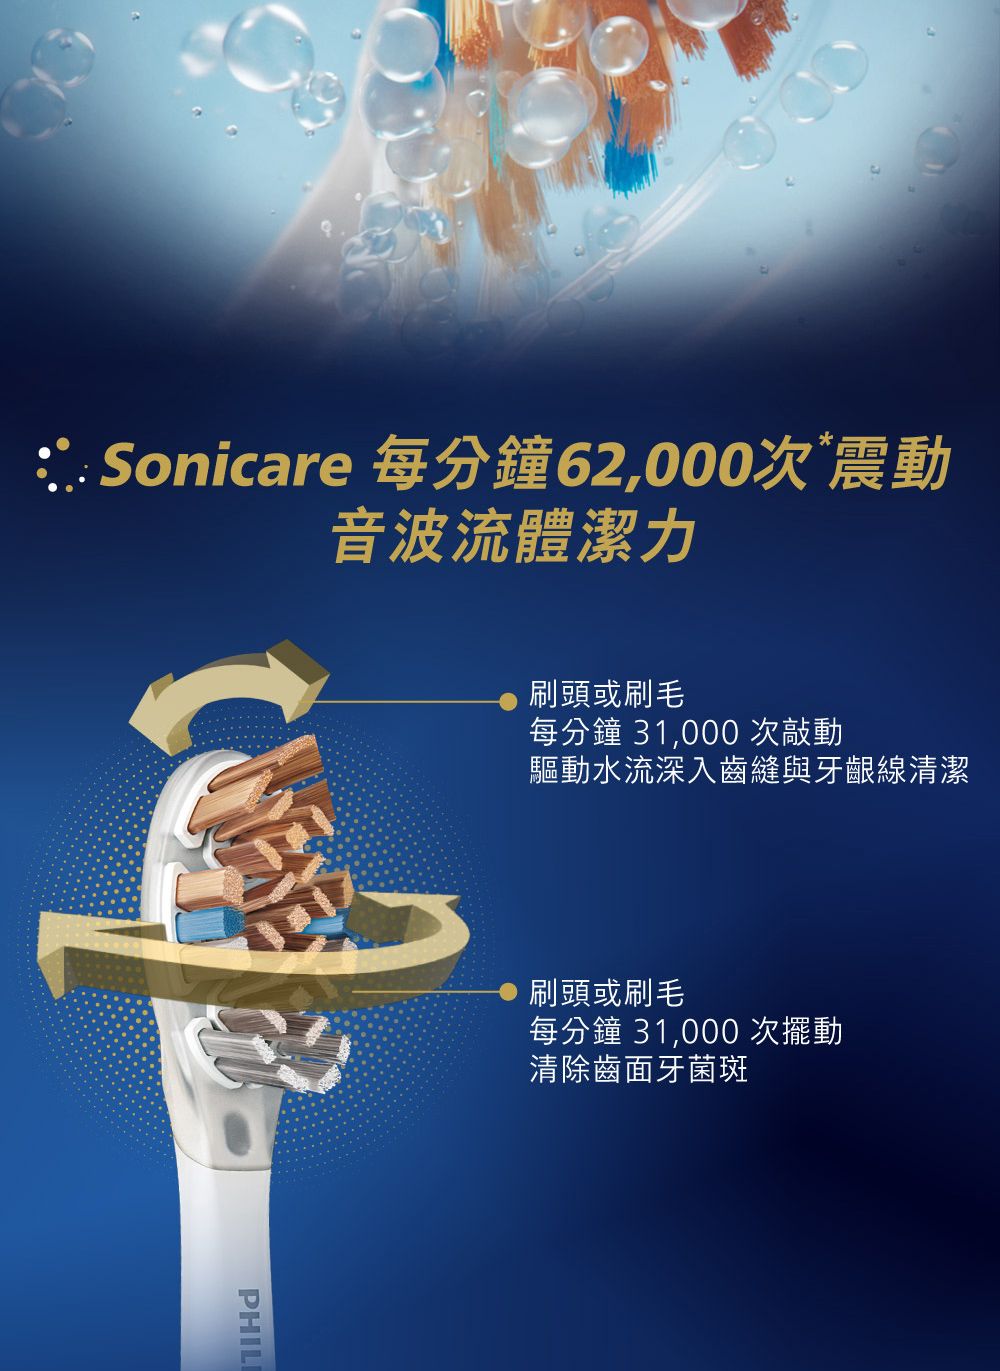 Sonicare 每分鐘62,000次震動音波流體潔力刷頭或刷毛每分鐘 31,000 次敲動驅動水流深入齒縫與牙齦線清潔刷頭或刷毛每分鐘 31,000 次擺動清除齒面牙菌斑